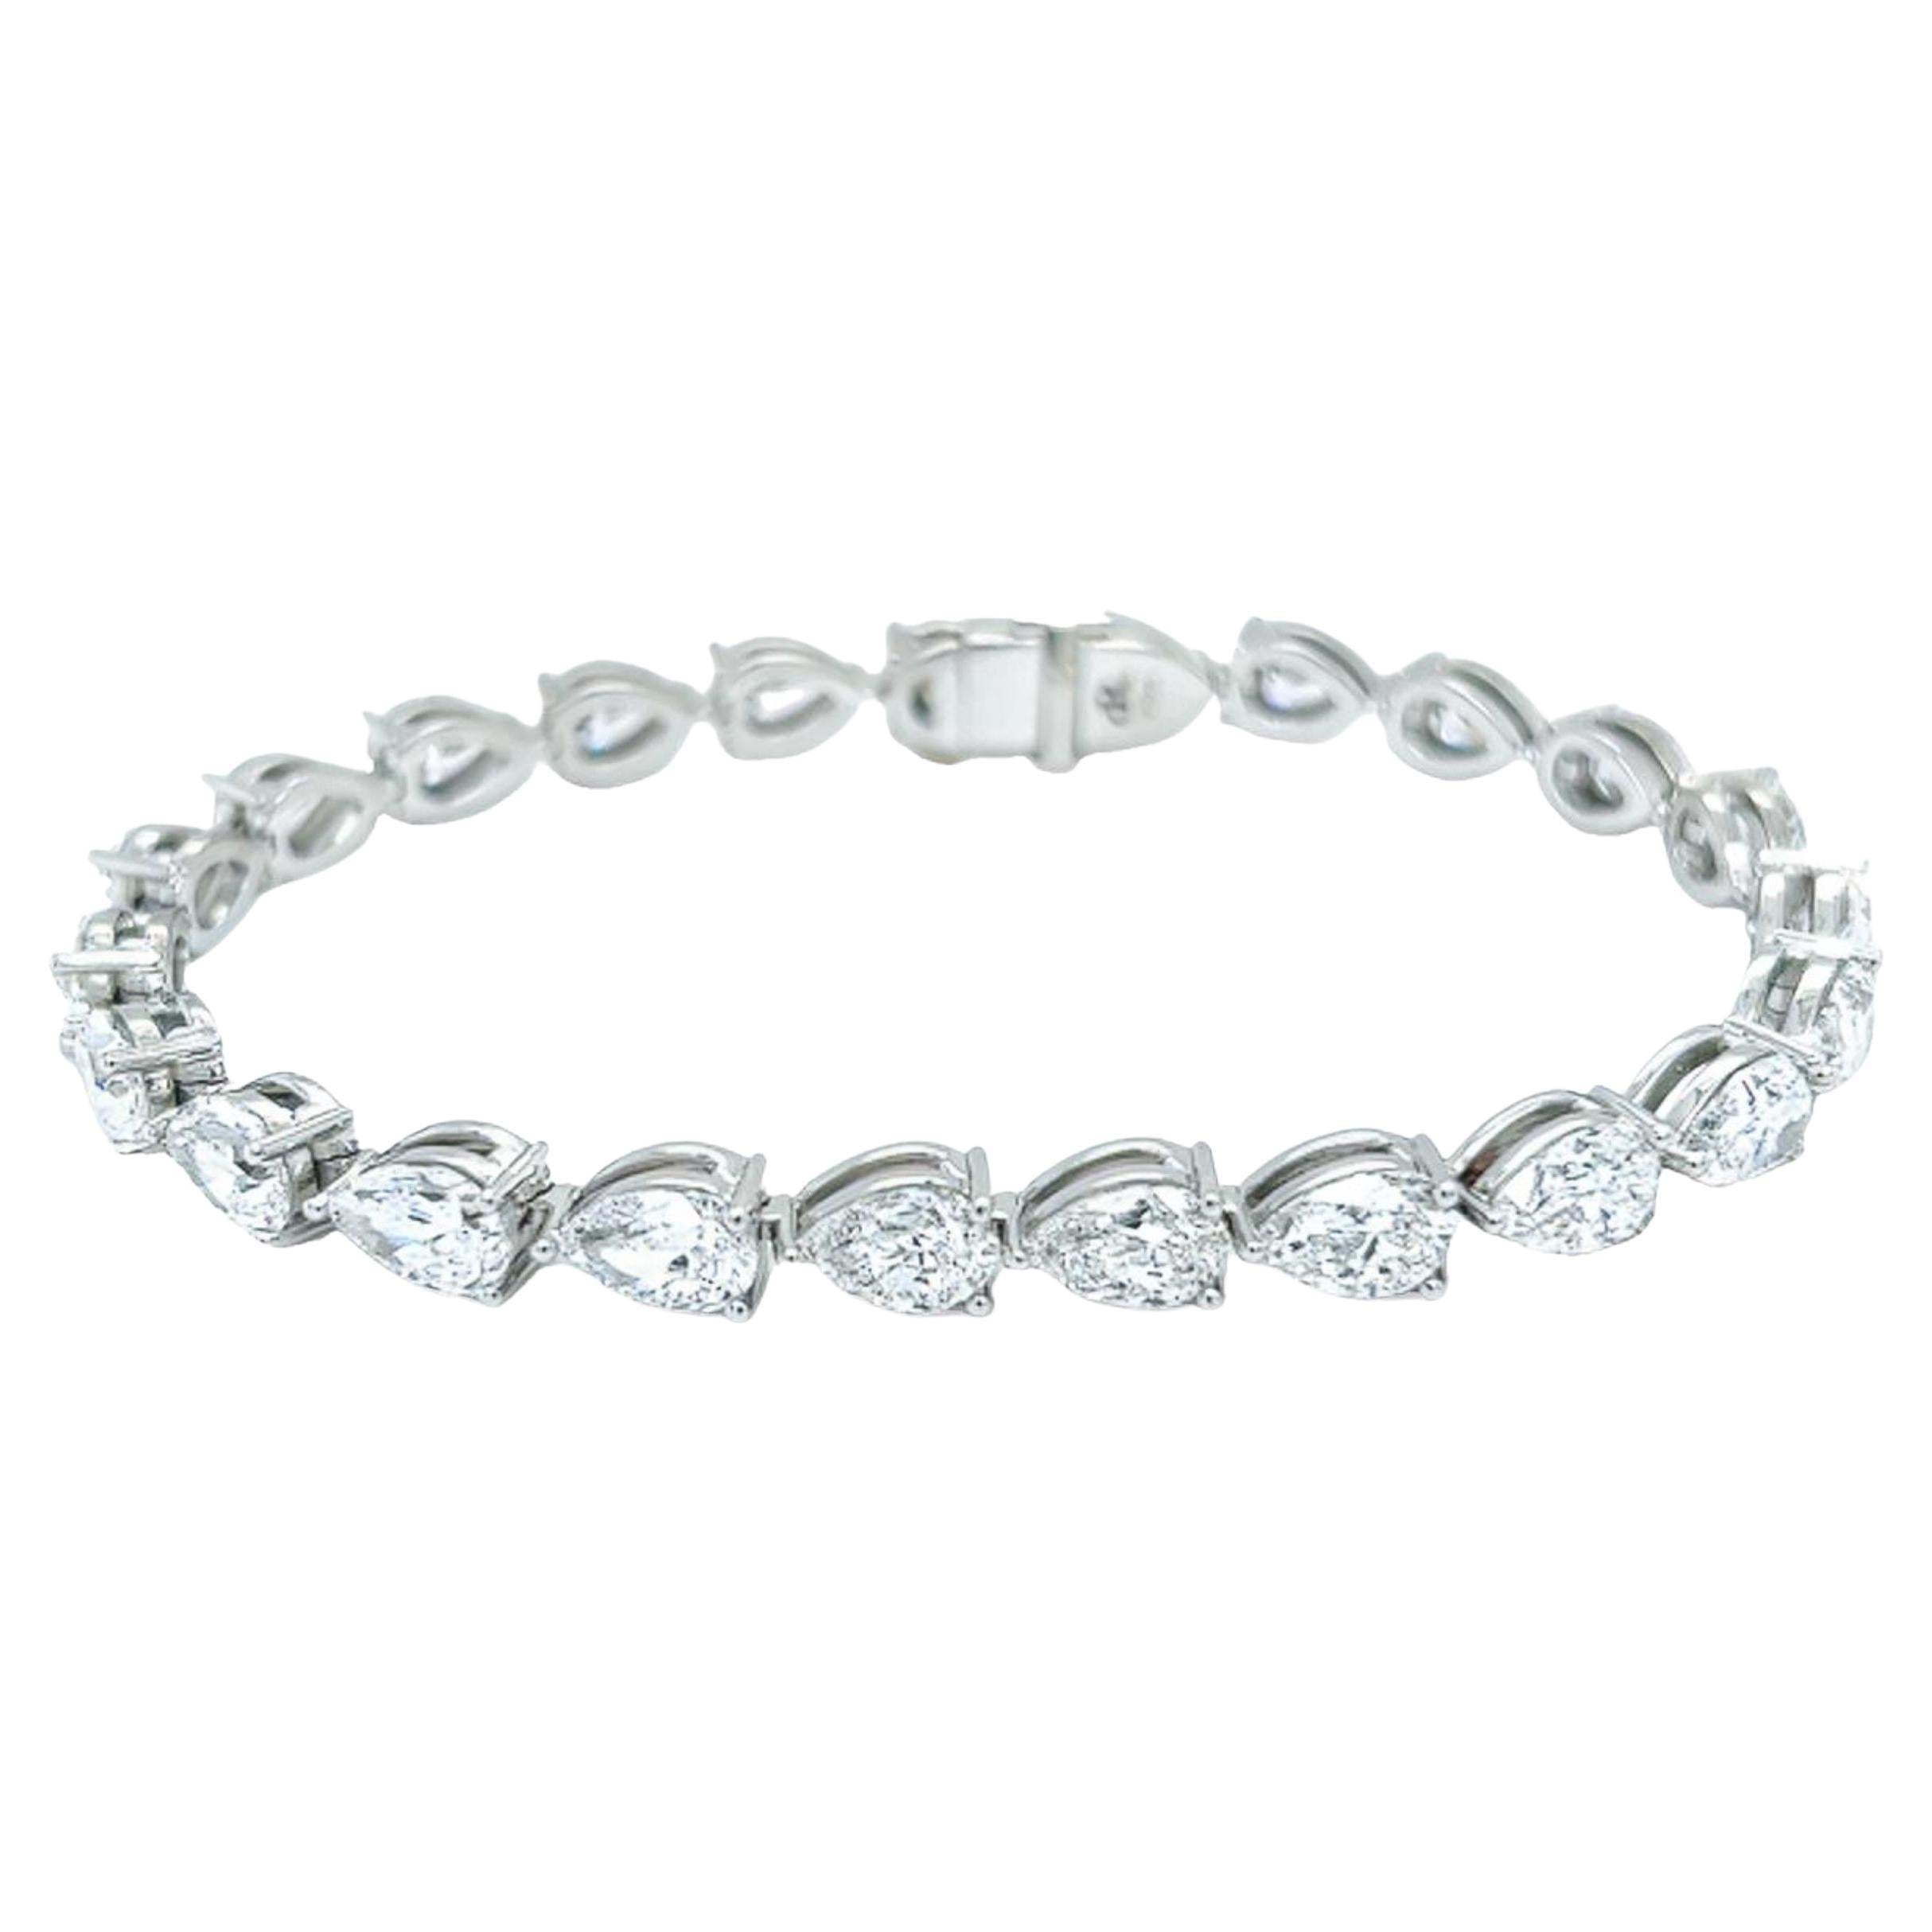 David Rosenberg 16.13 Carat TW White Pear Shape GIA Diamond Tennis Bracelet